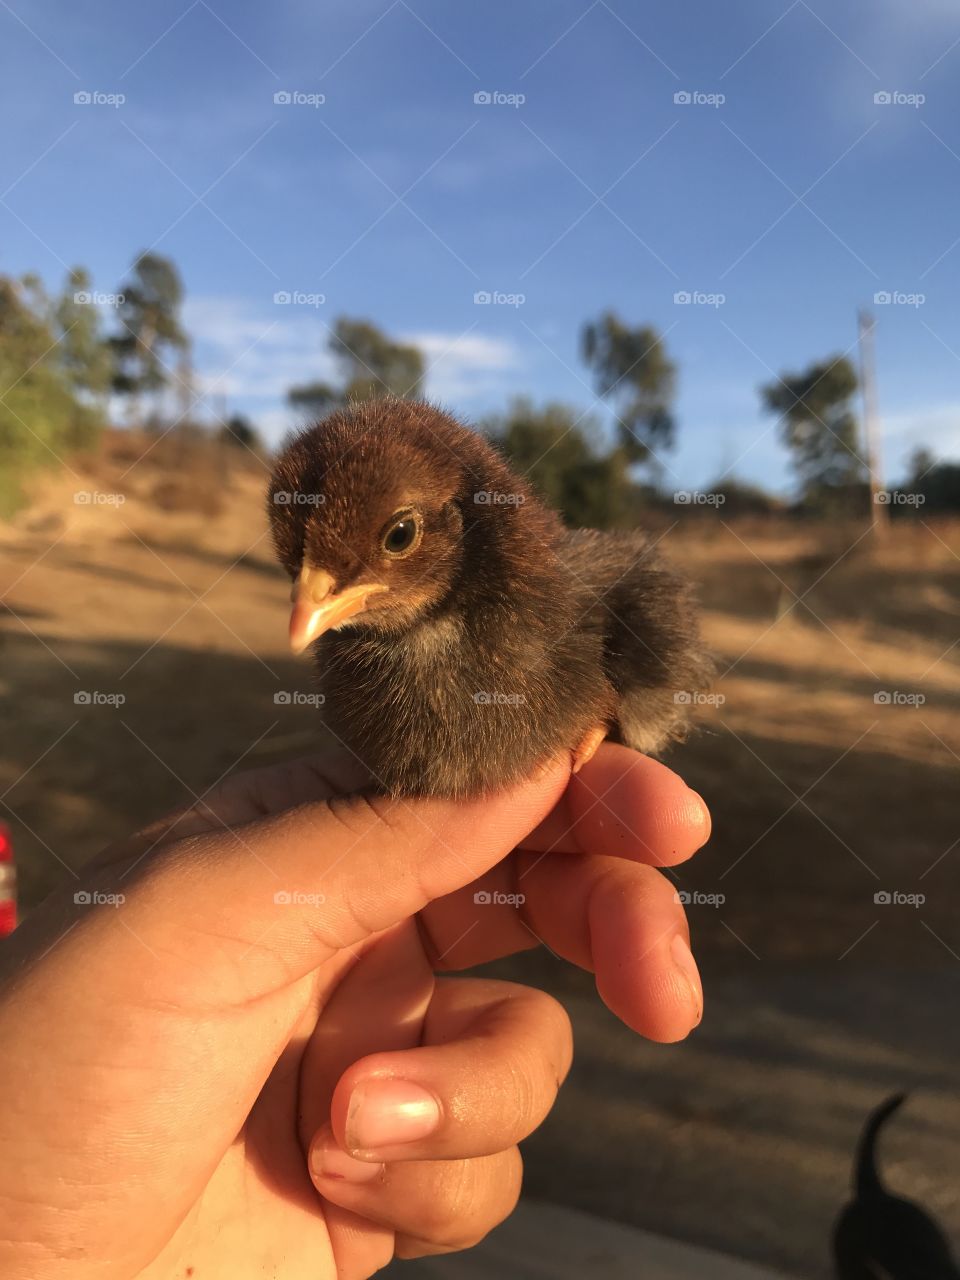 Baby chick 